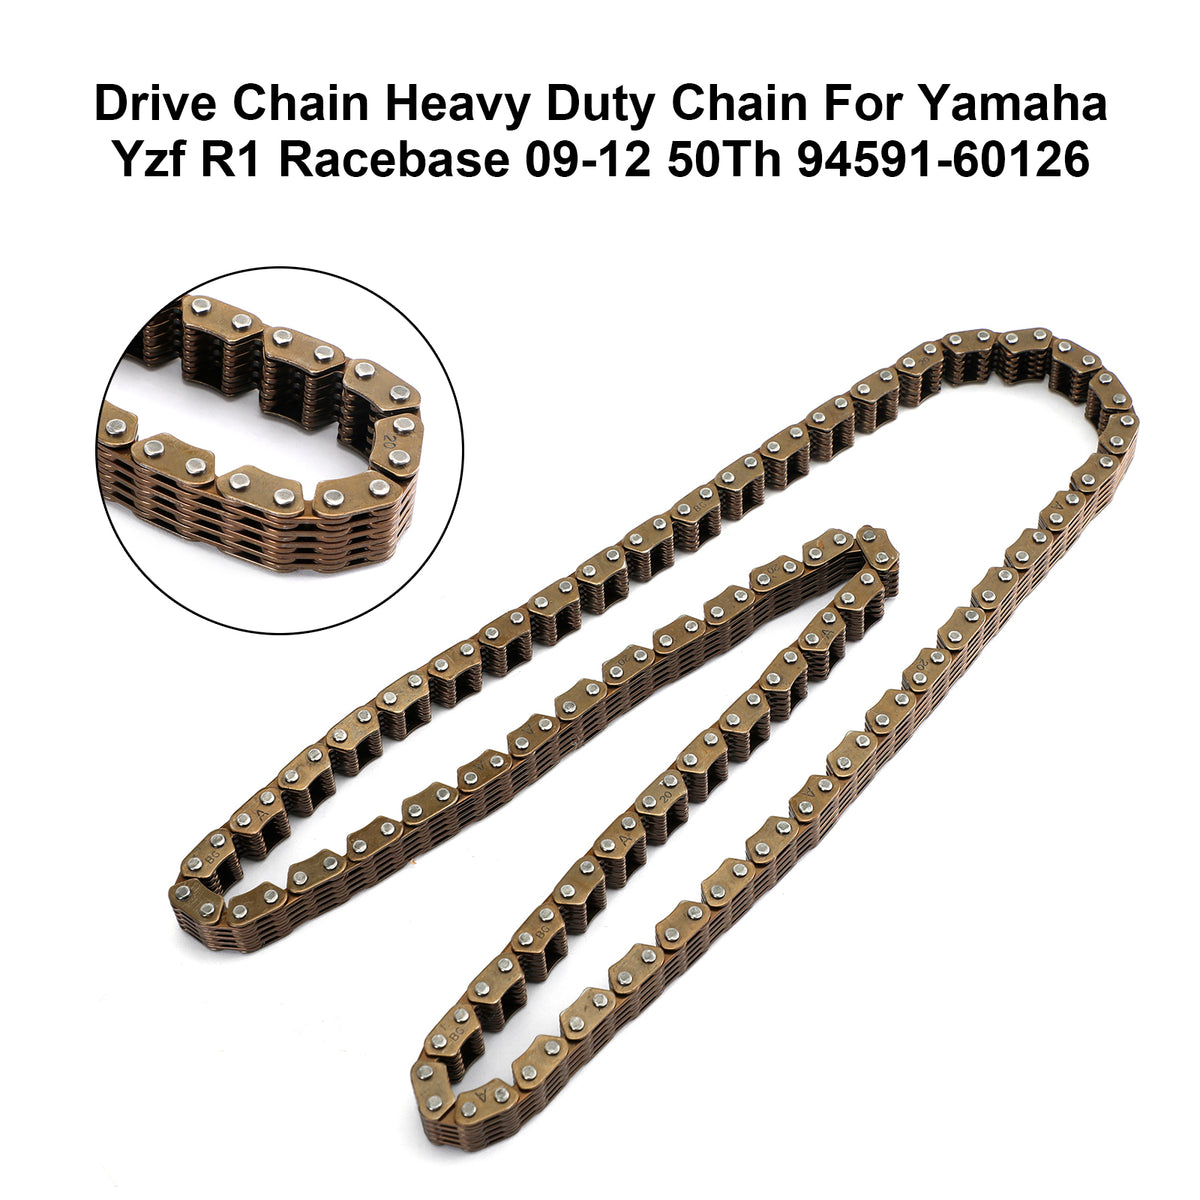 Drive Chain Heavy Duty Chain For Yamaha Yzf R1 Racebase 09-12 50Th 94591-60126 Generic